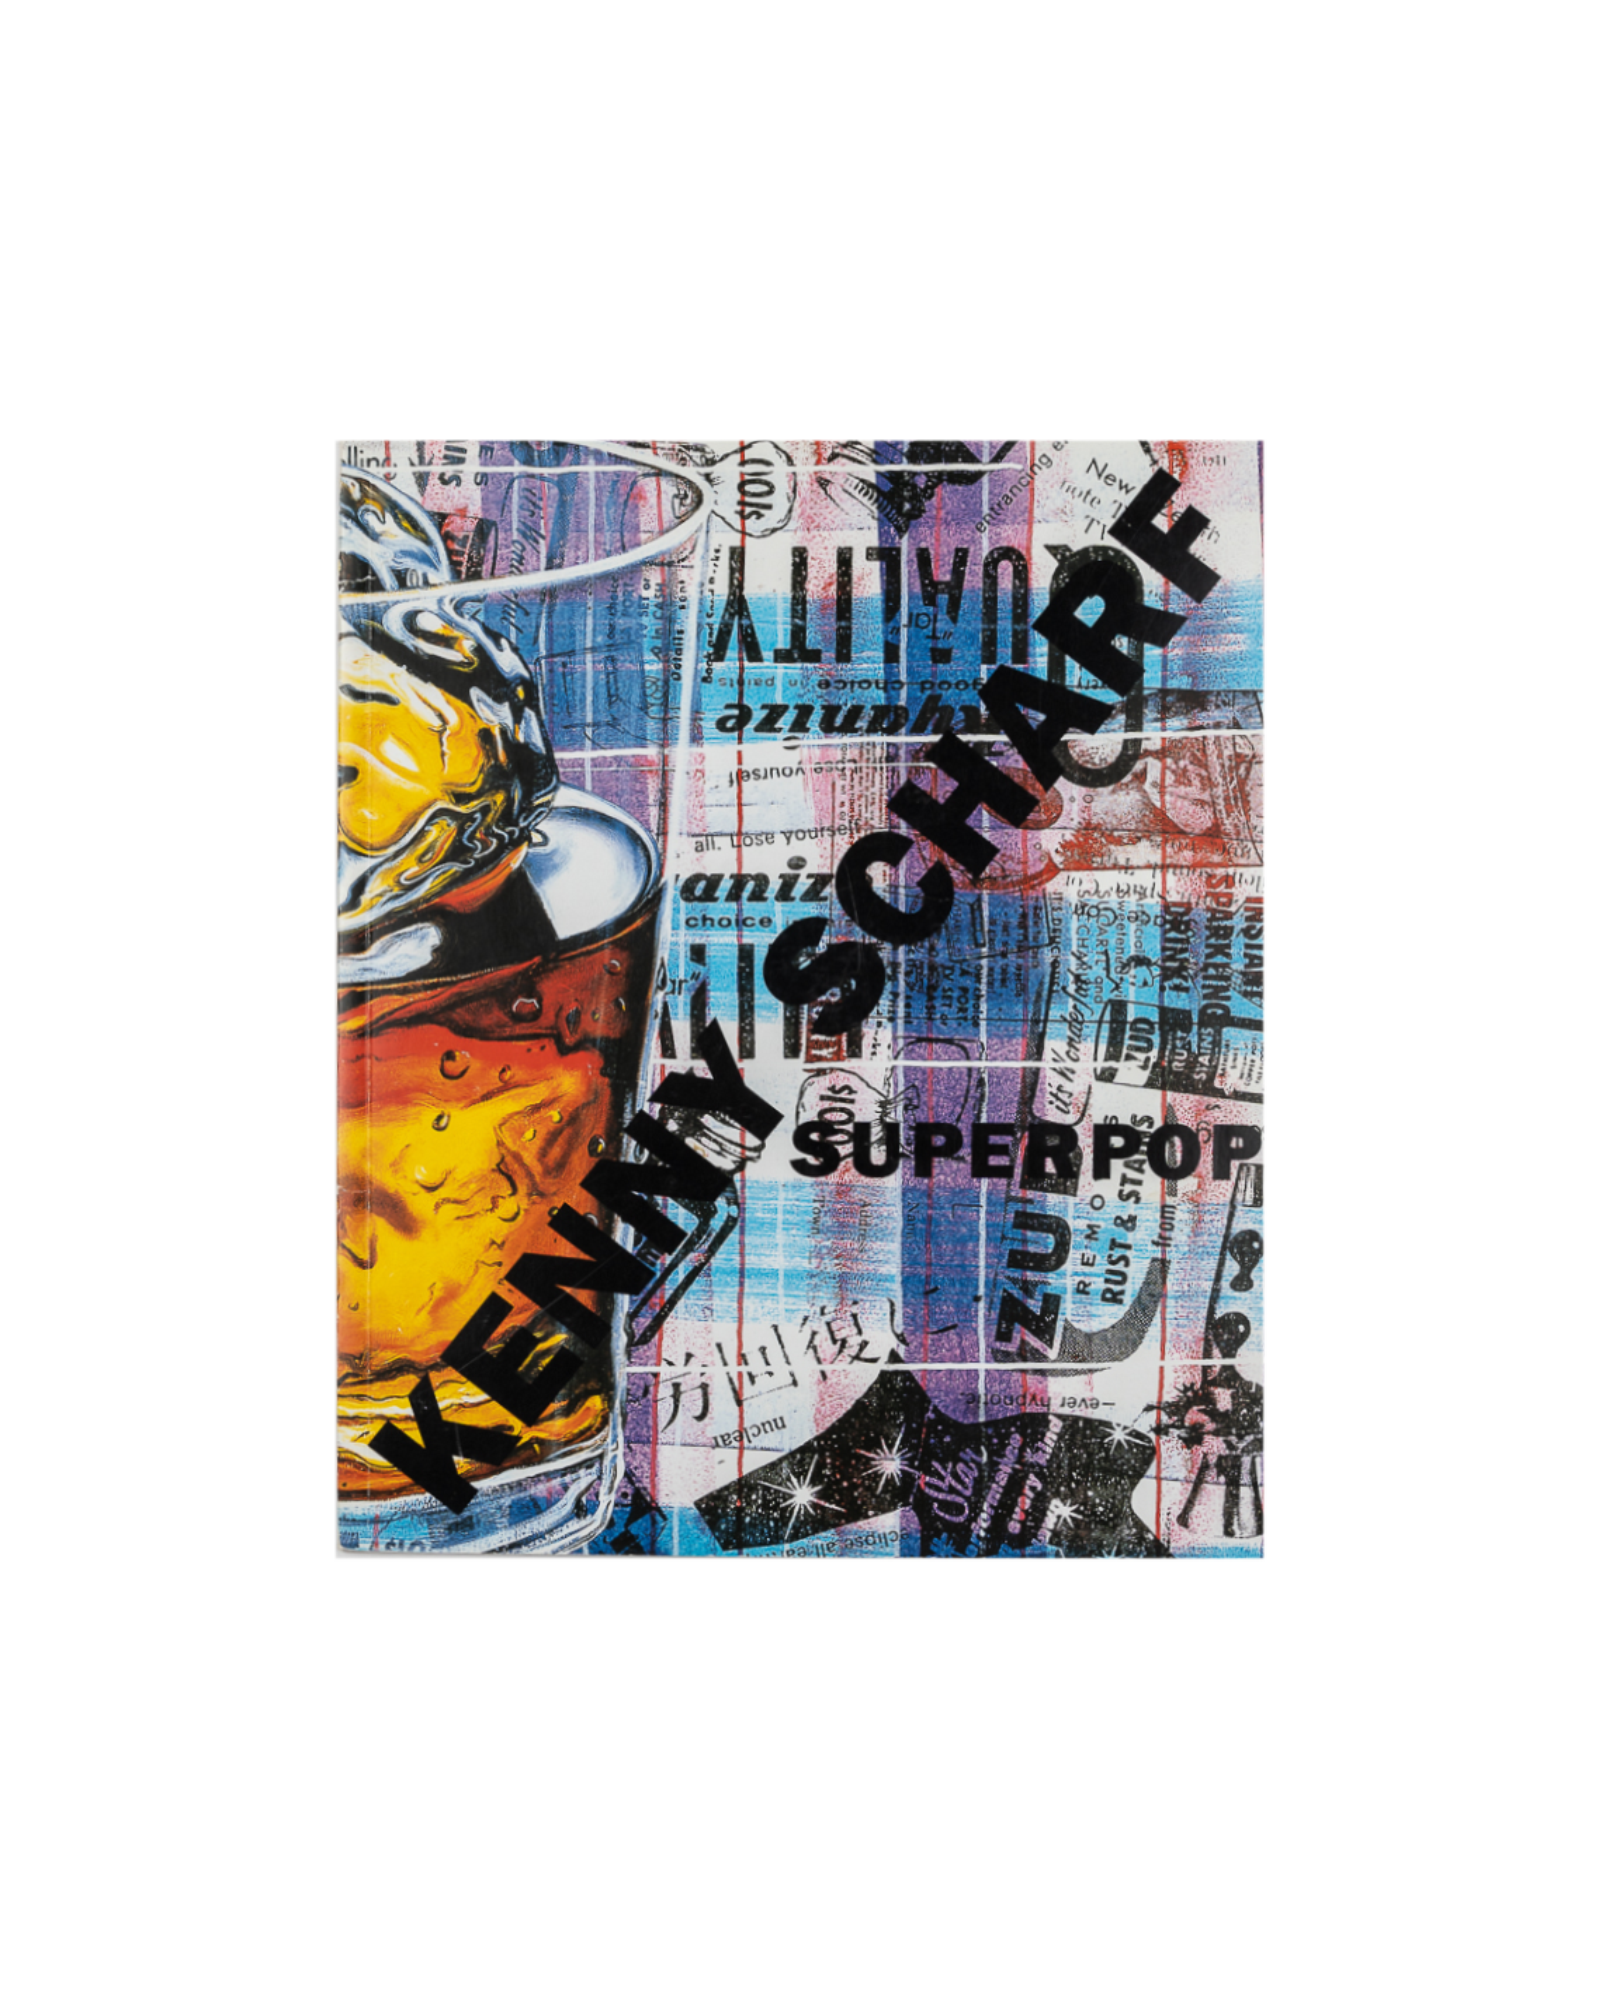 Classic Paris - Book - Kenny Scharf - Superpop